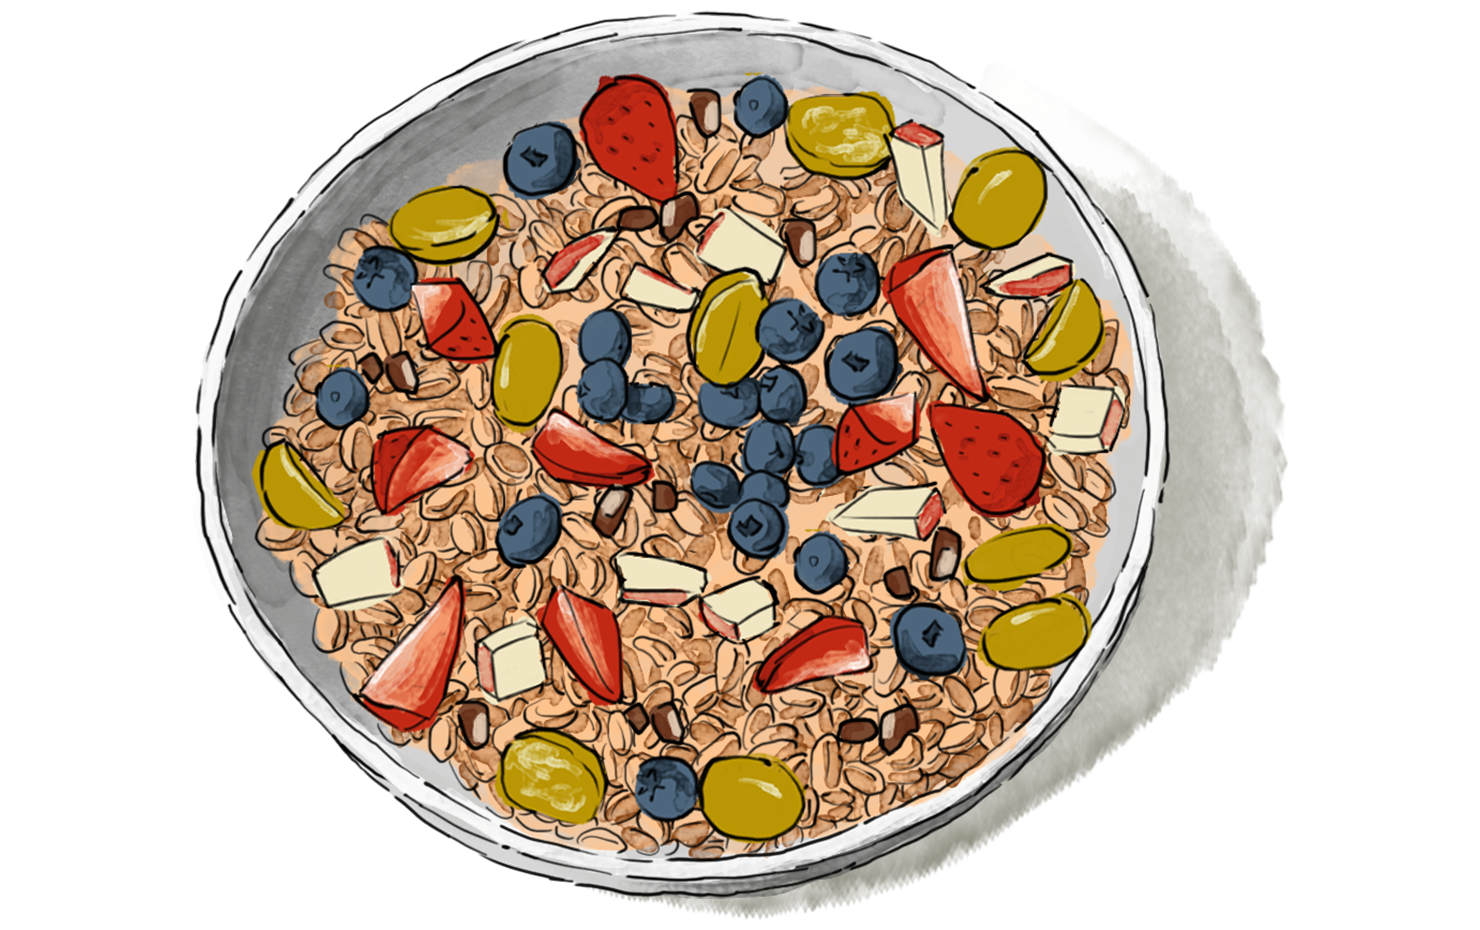 Illustration of a bowl of Muesli